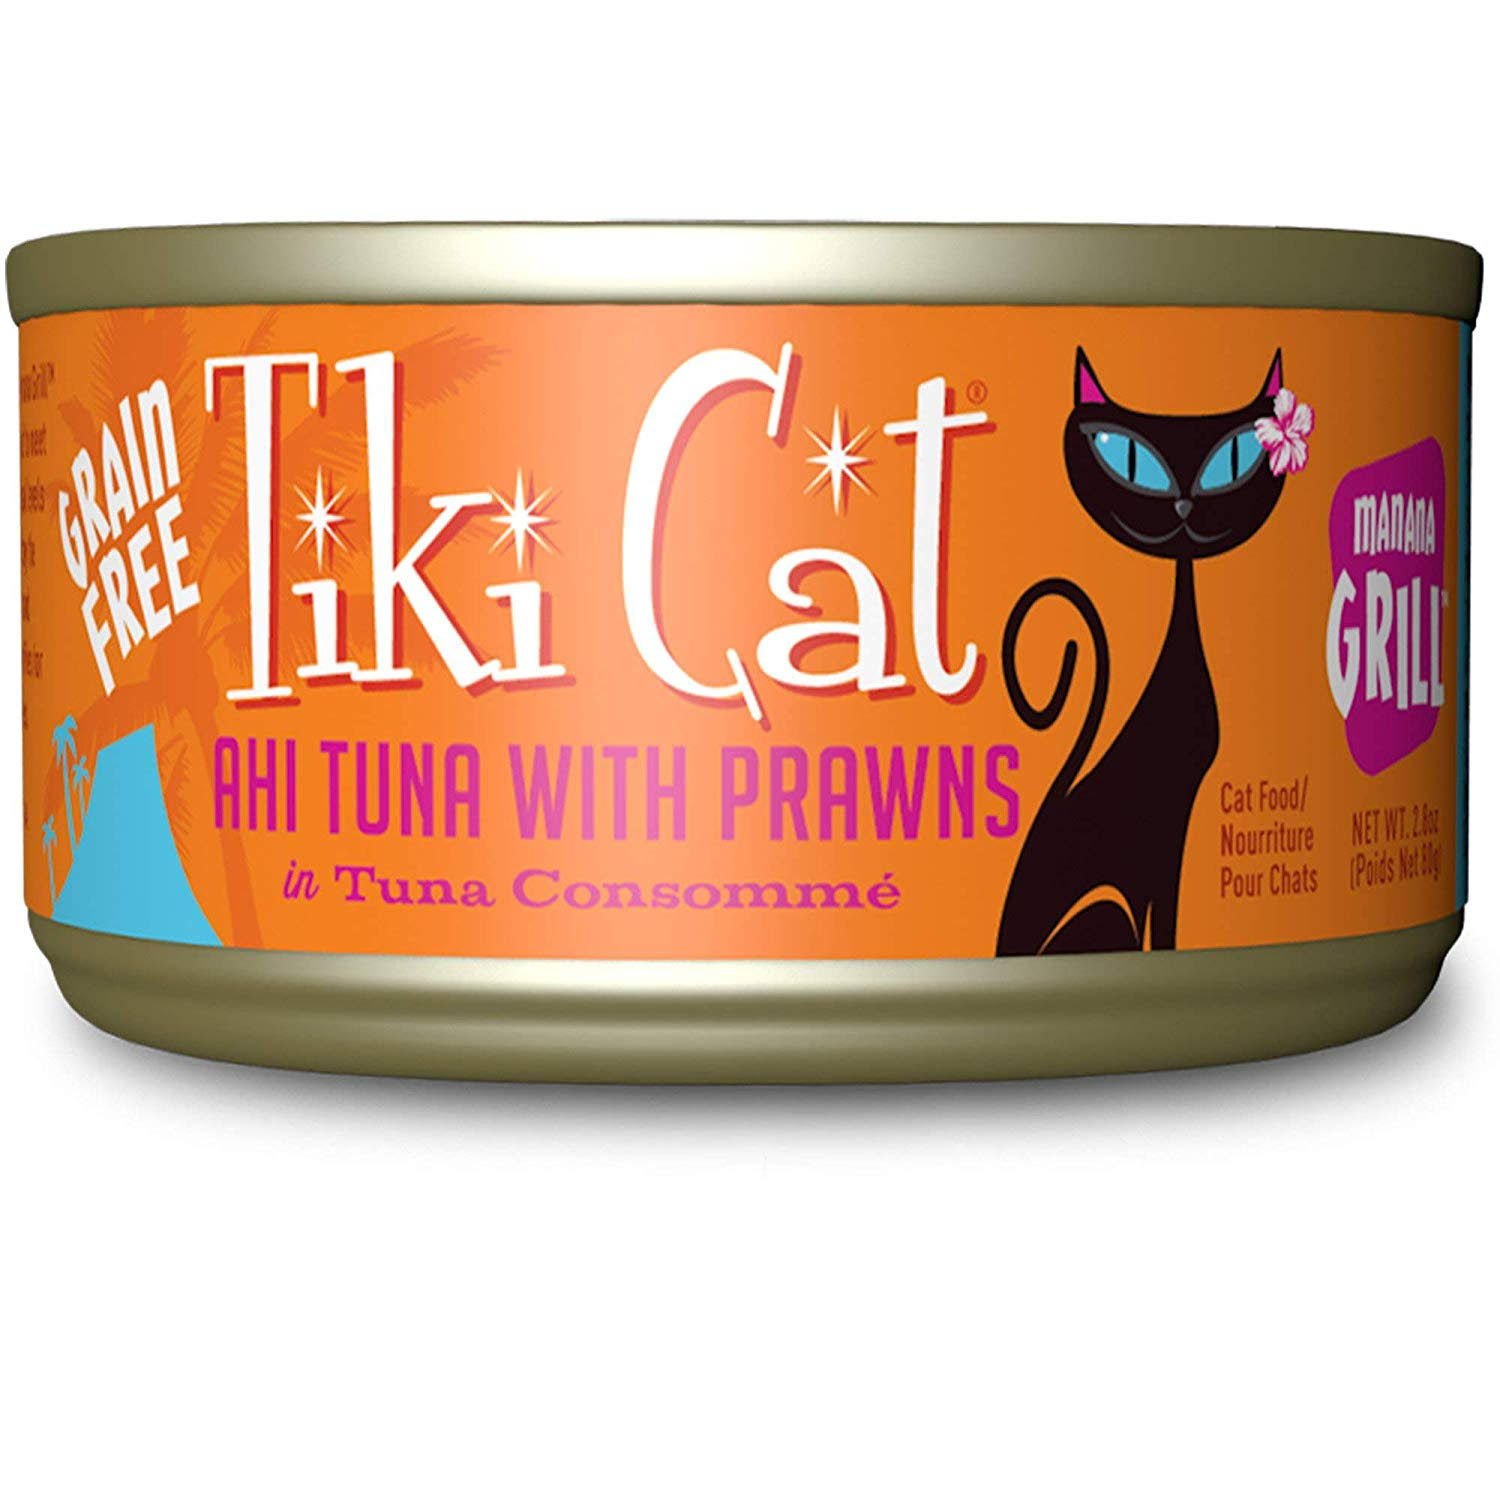 Tiki Cat Manana Grill Ahi Tuna with Prawns Canned Cat Food